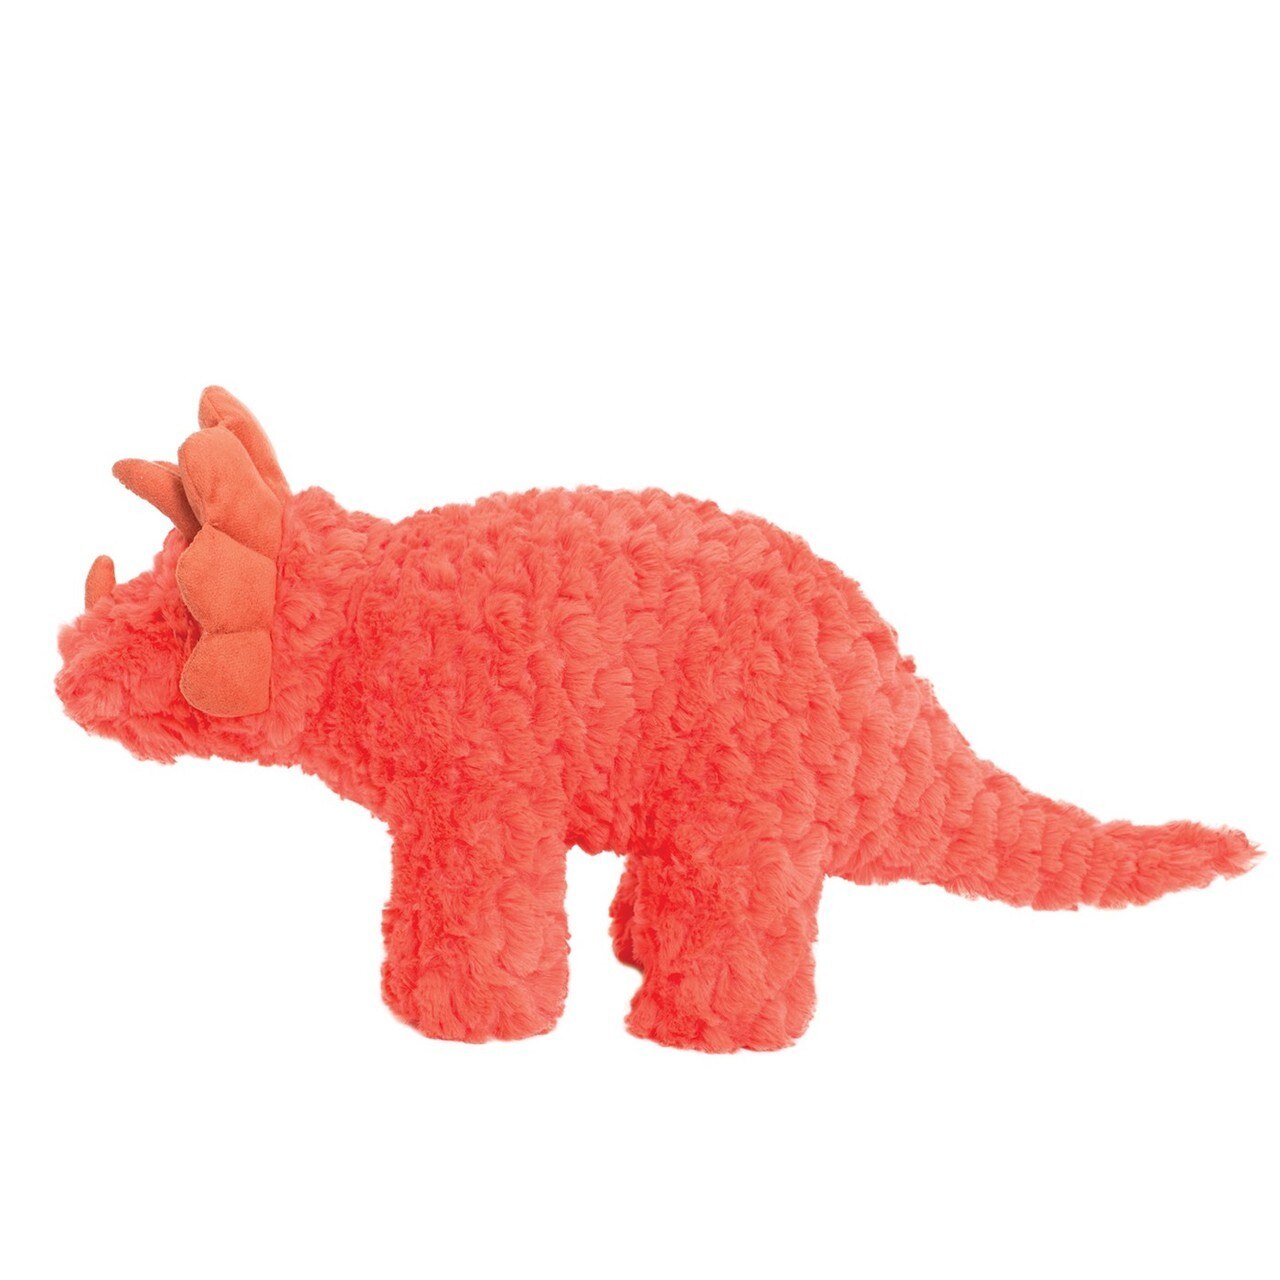 Manhattan Toy Company Little Jurassics Dinosaur Plush Toy - Rory Dinosaur